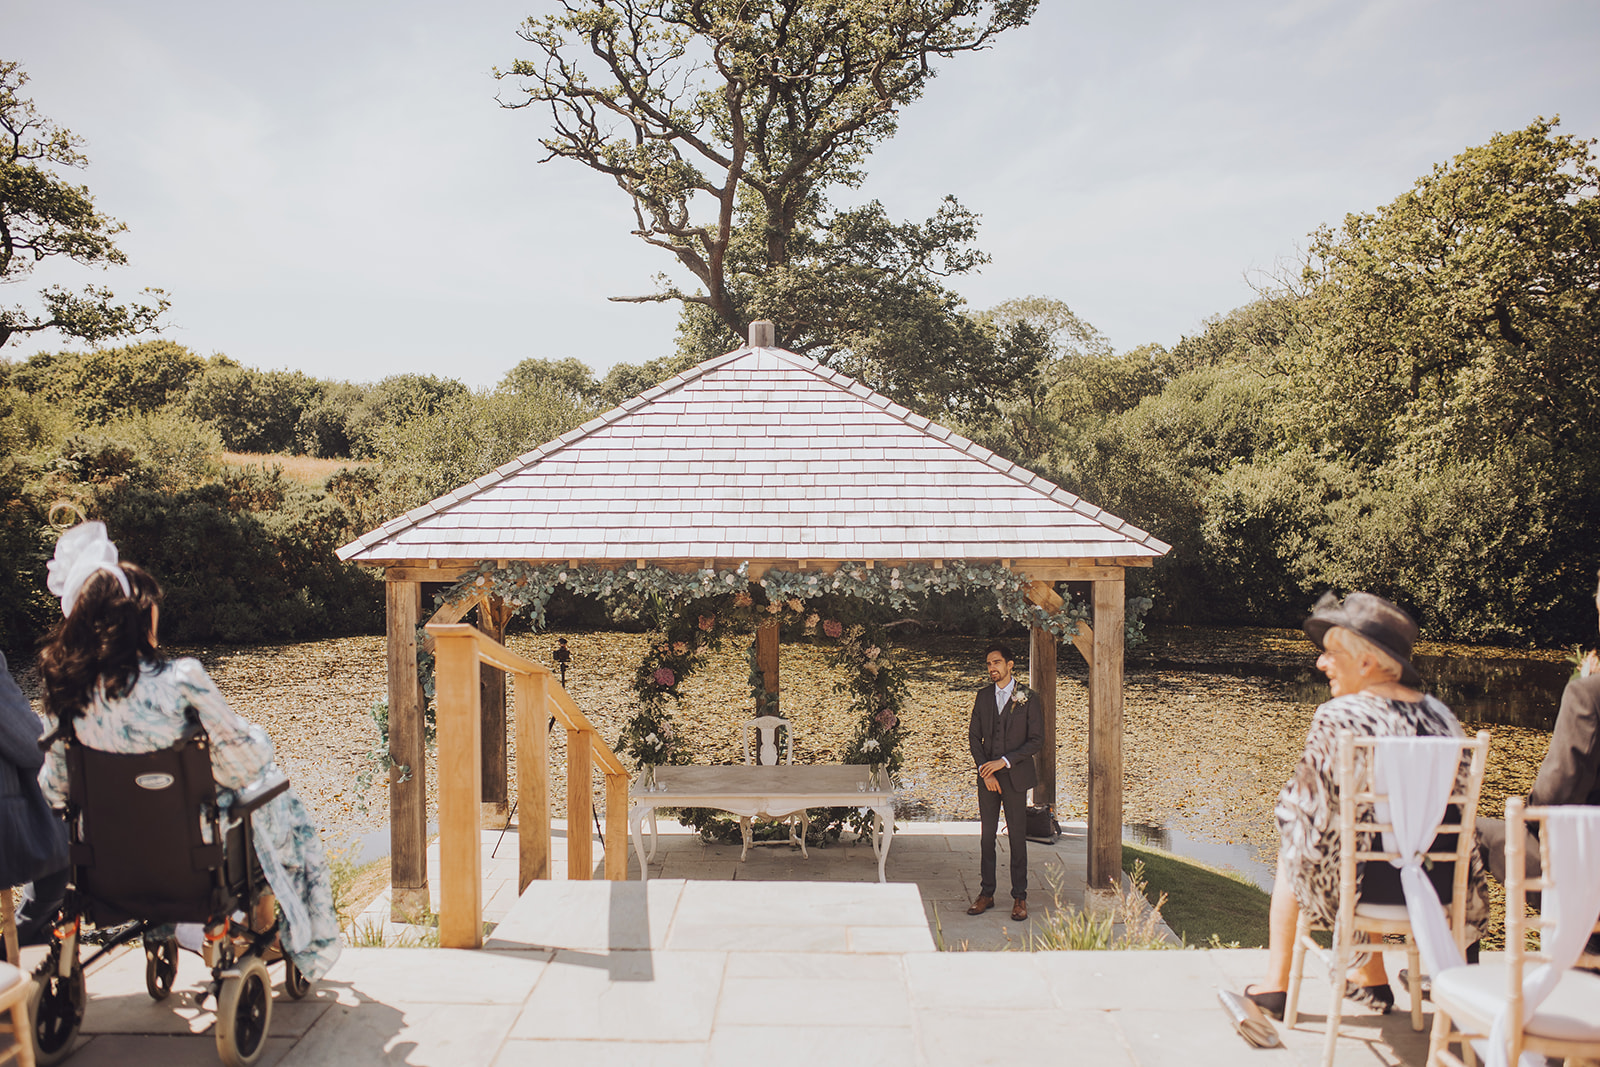 Oldwalls woodland outdoor wedding ceremony